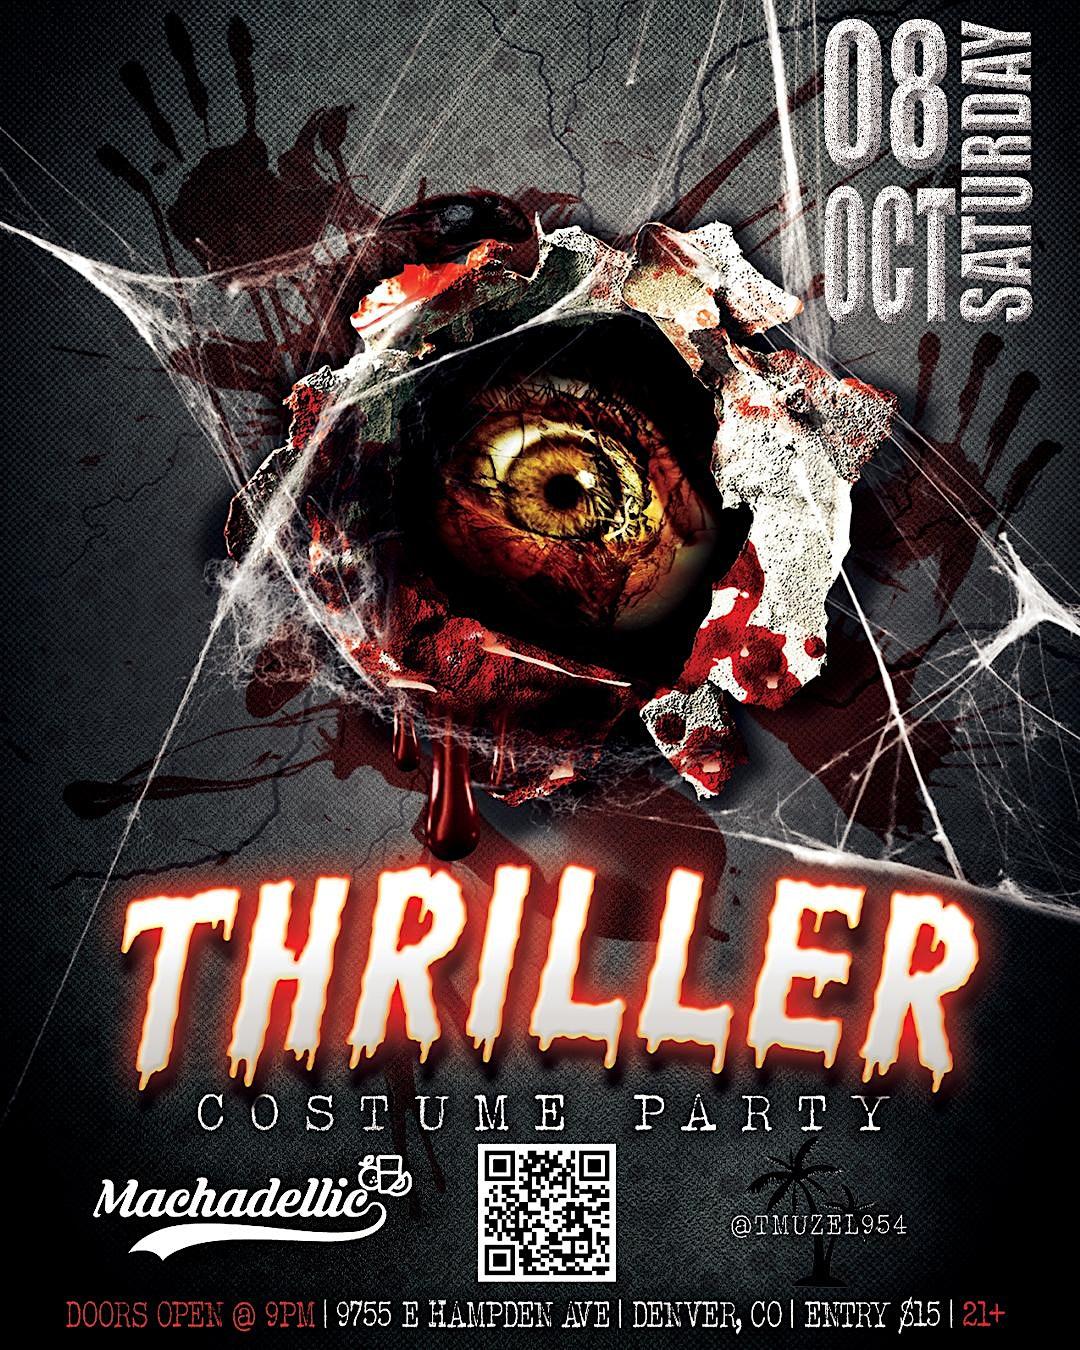 Thriller Costume Party
Sat Oct 8, 9:00 PM - Sun Oct 9, 2:00 AM